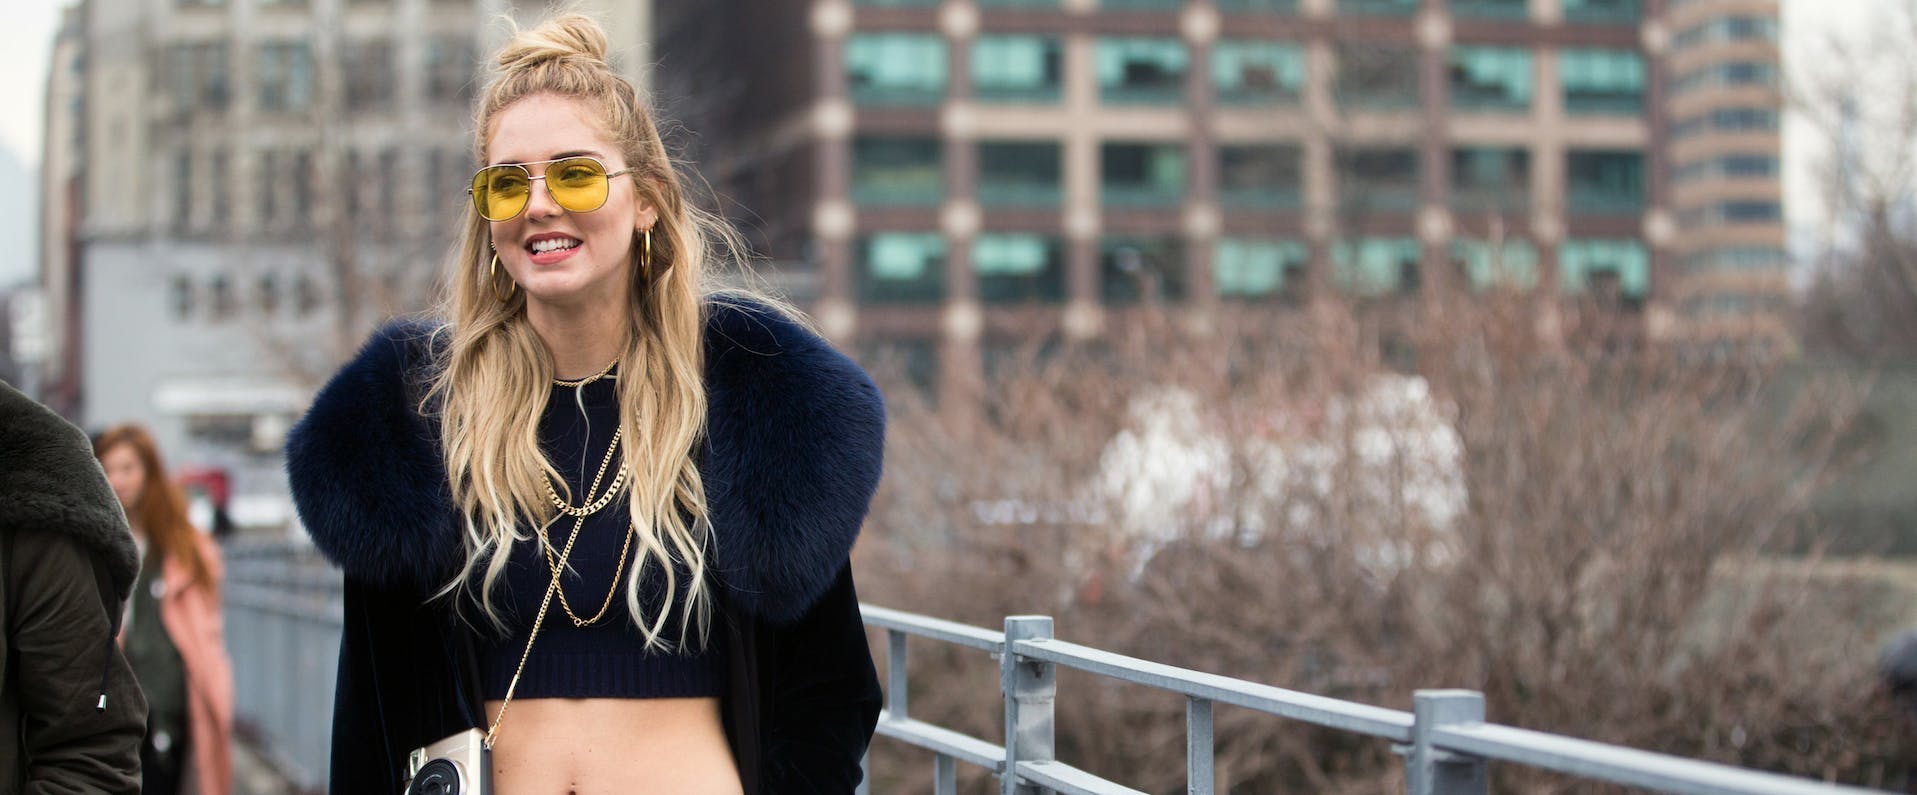 person human sunglasses accessories accessory female clothing apparel